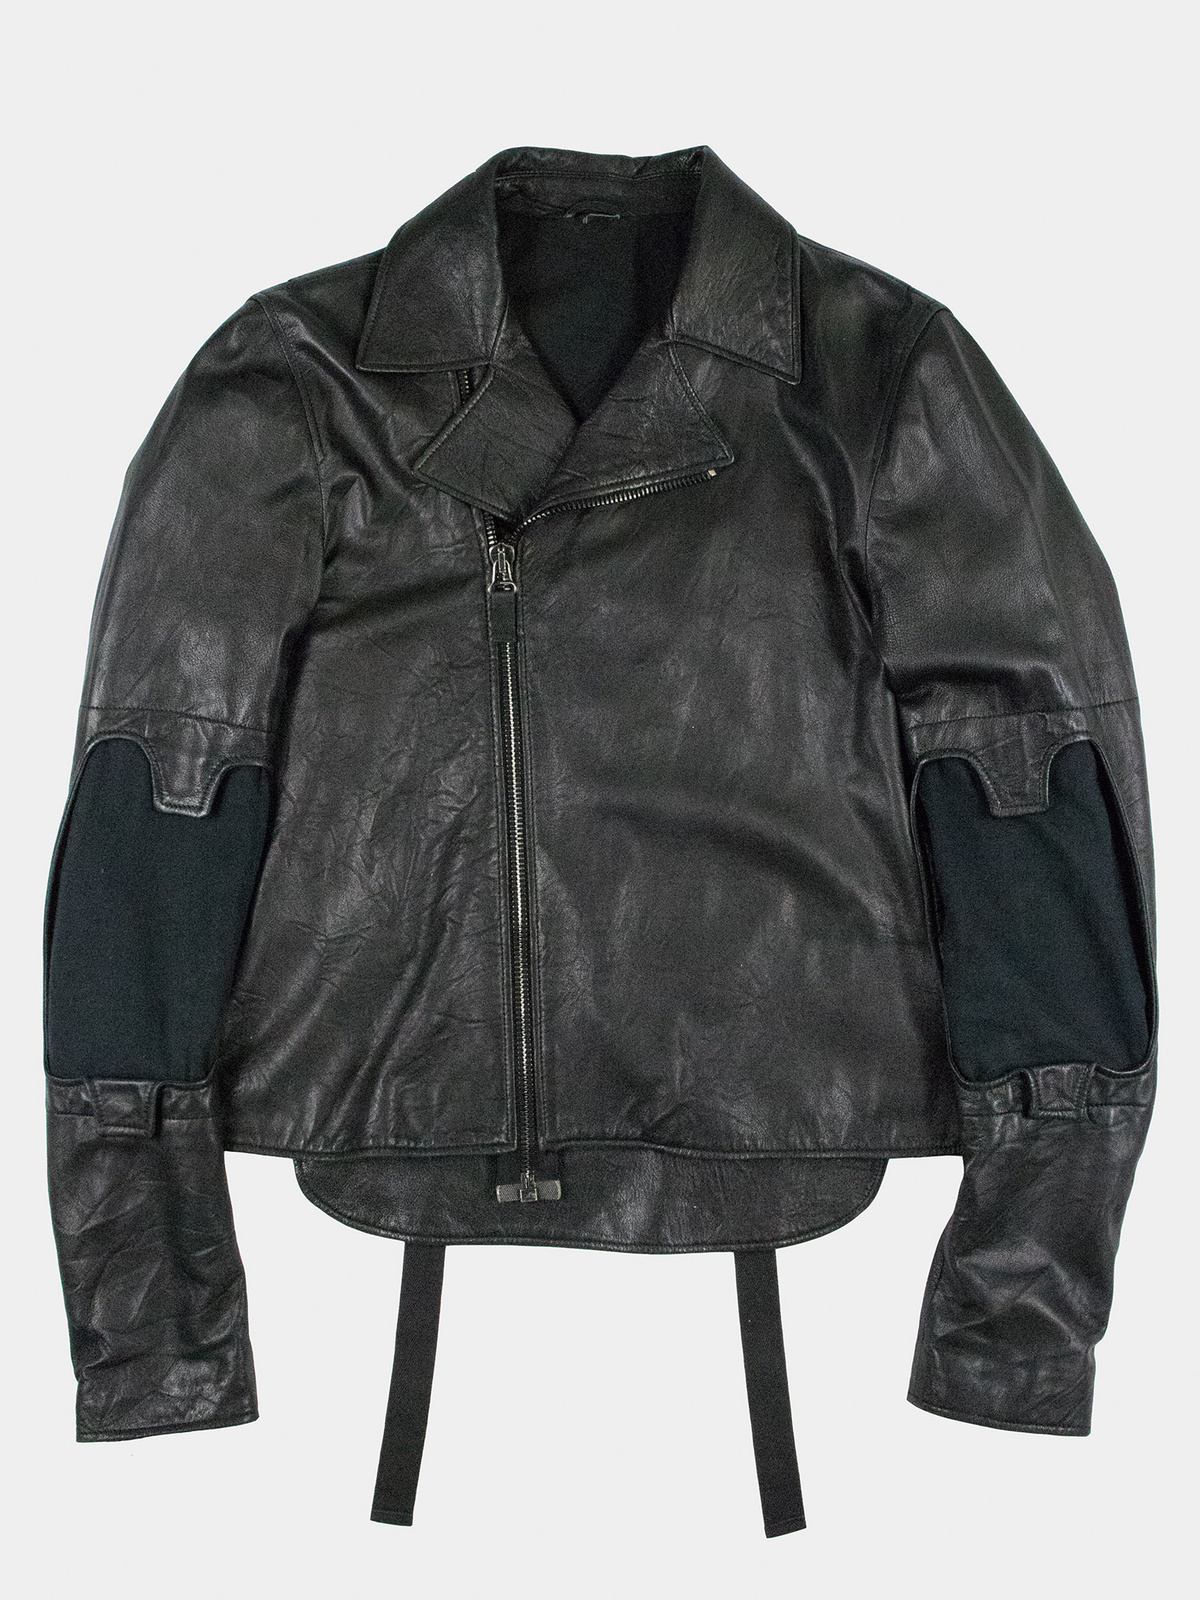 Helmut Lang Archive 04ss biker jacket - ライダースジャケット